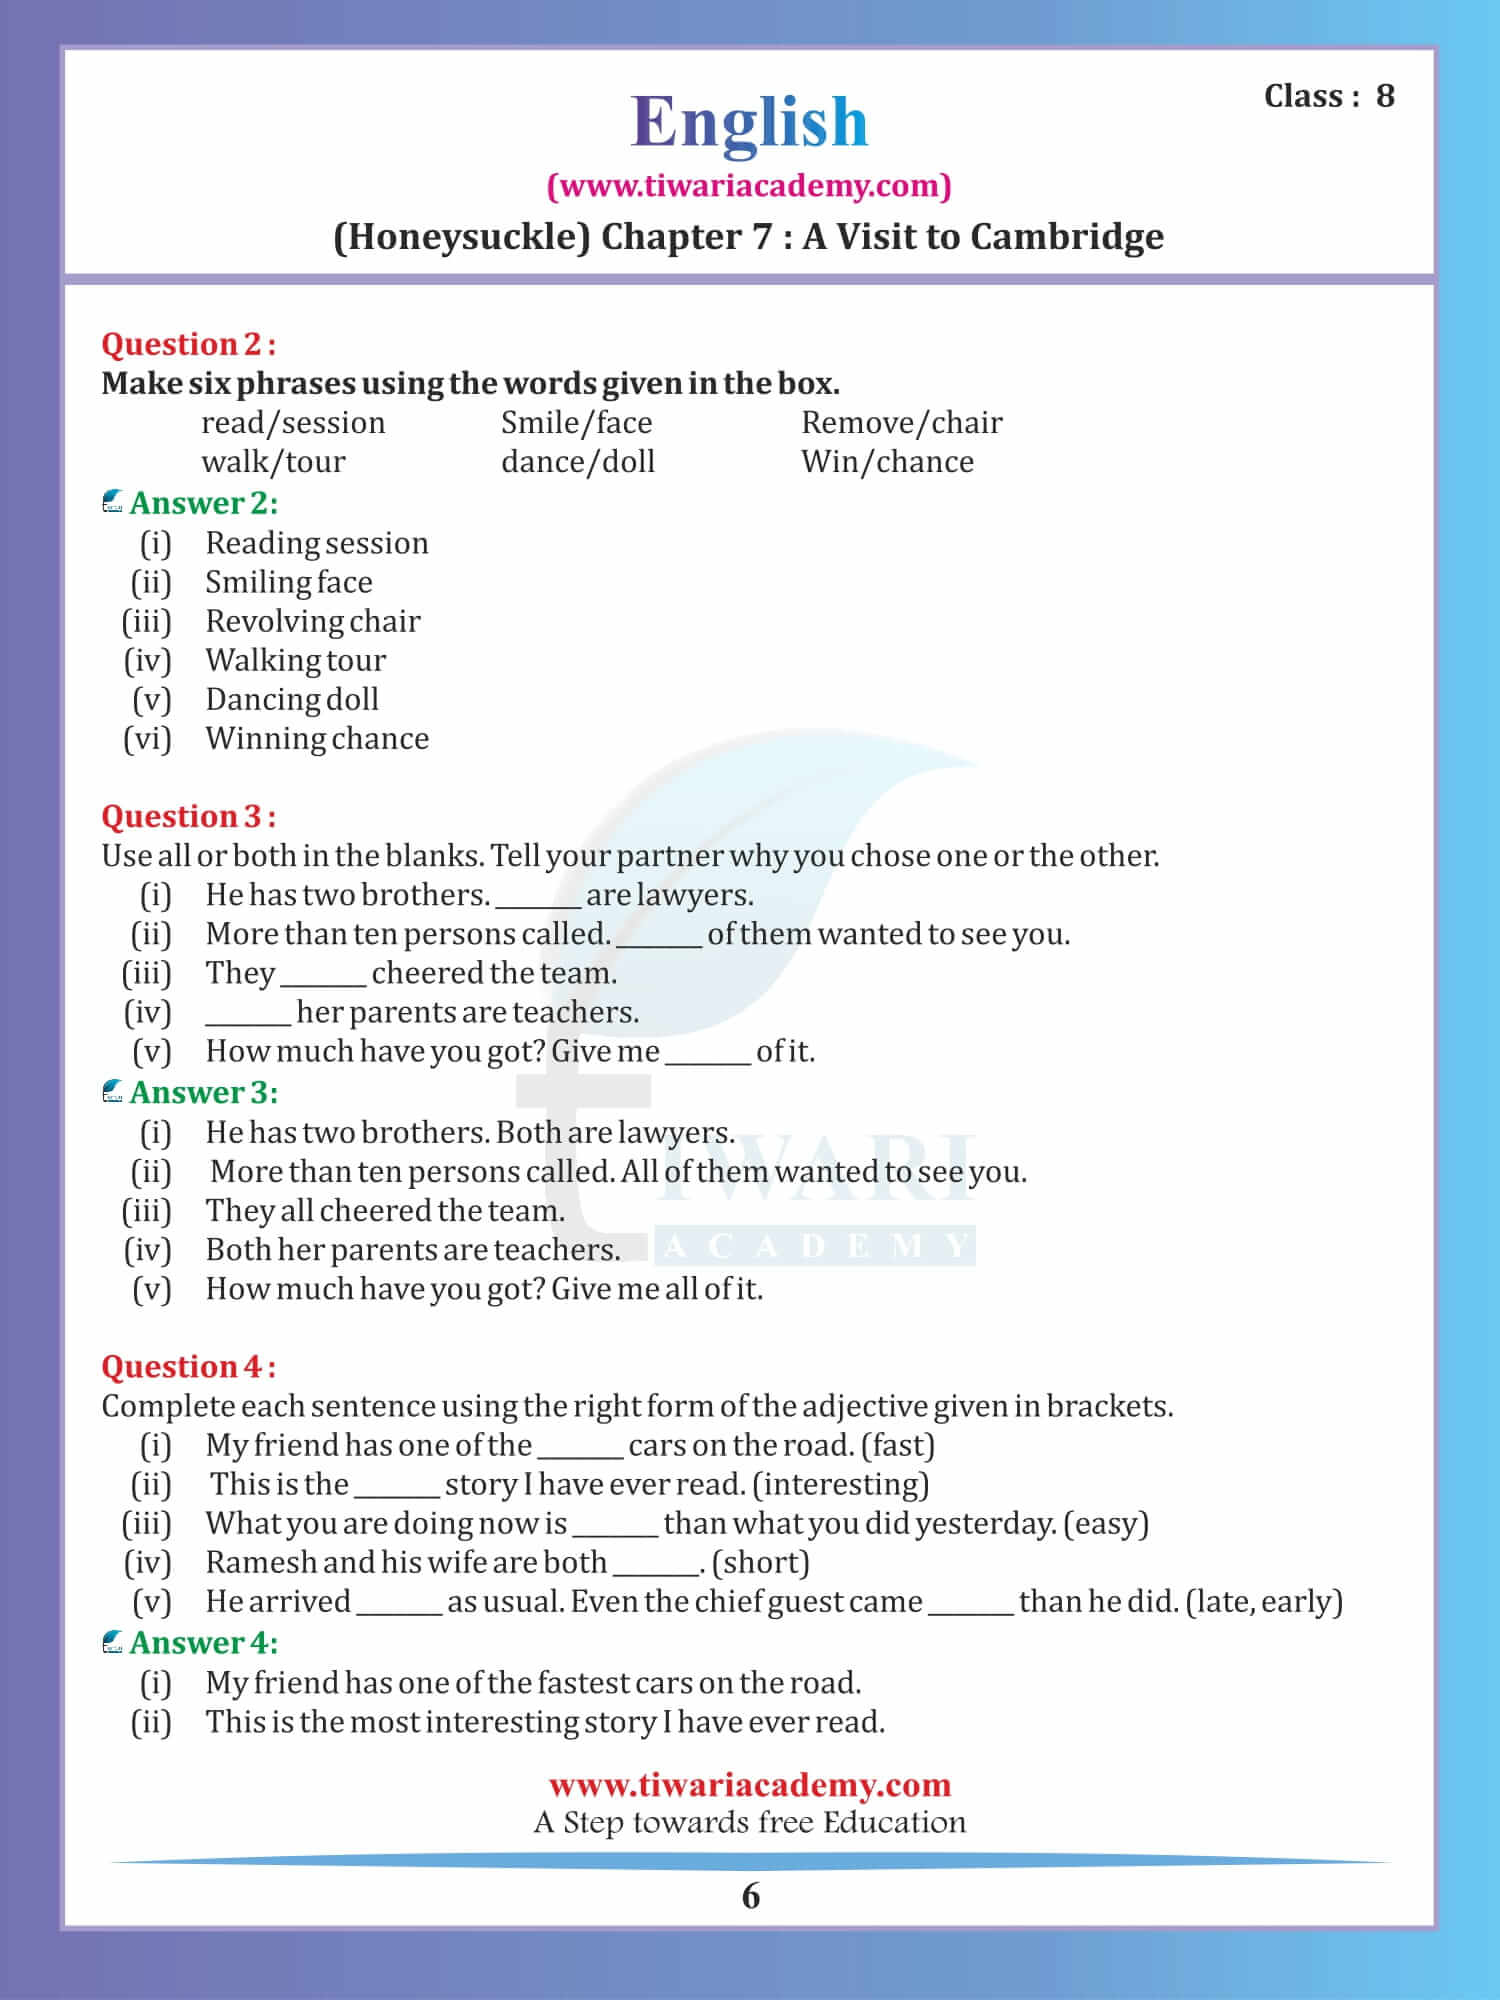 Class 8 English Honeydew Chapter 7 pdf